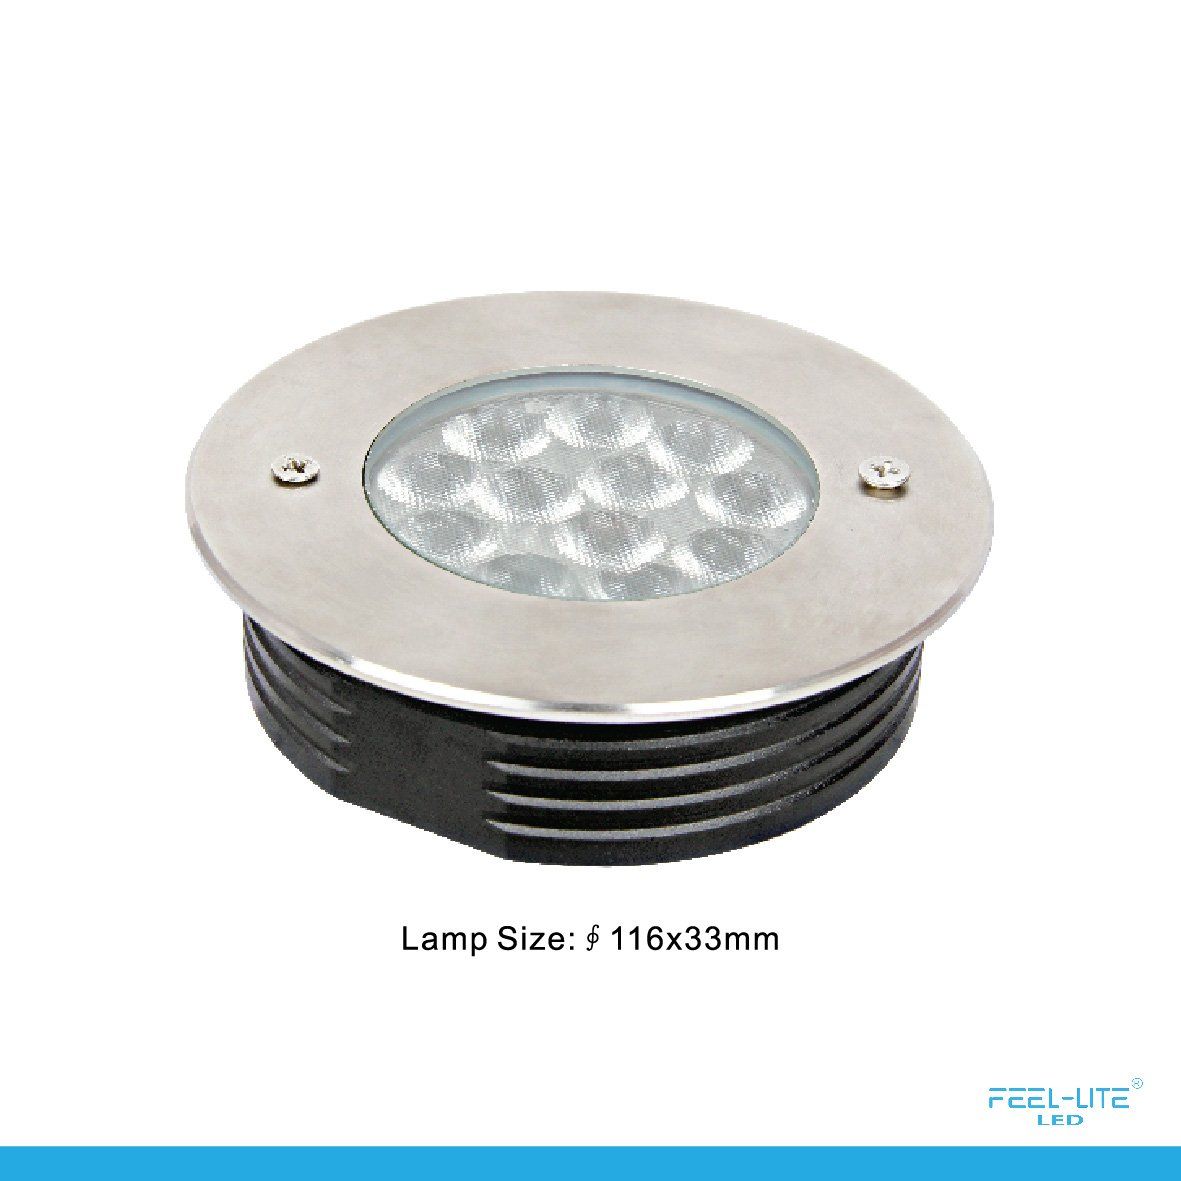 Feel-Lite LED Outdoor Light U729-9w-smd